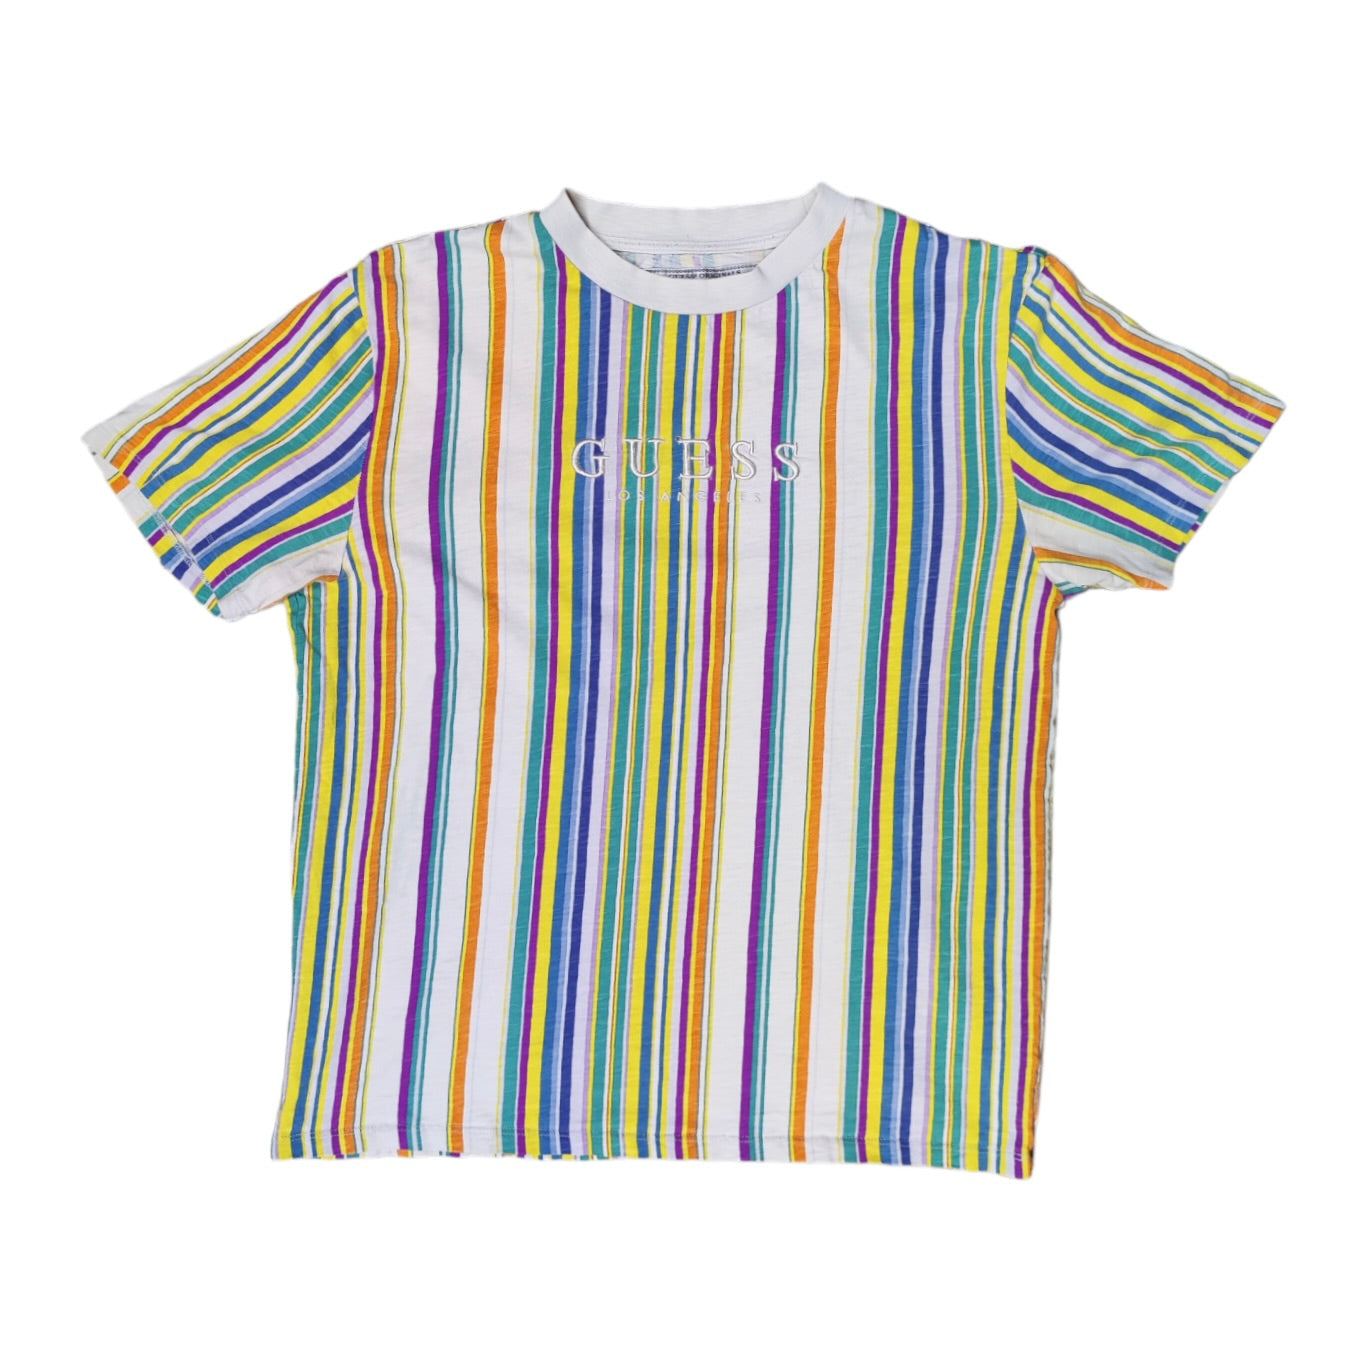 Guess Originals Multicolor Striped Tshirt